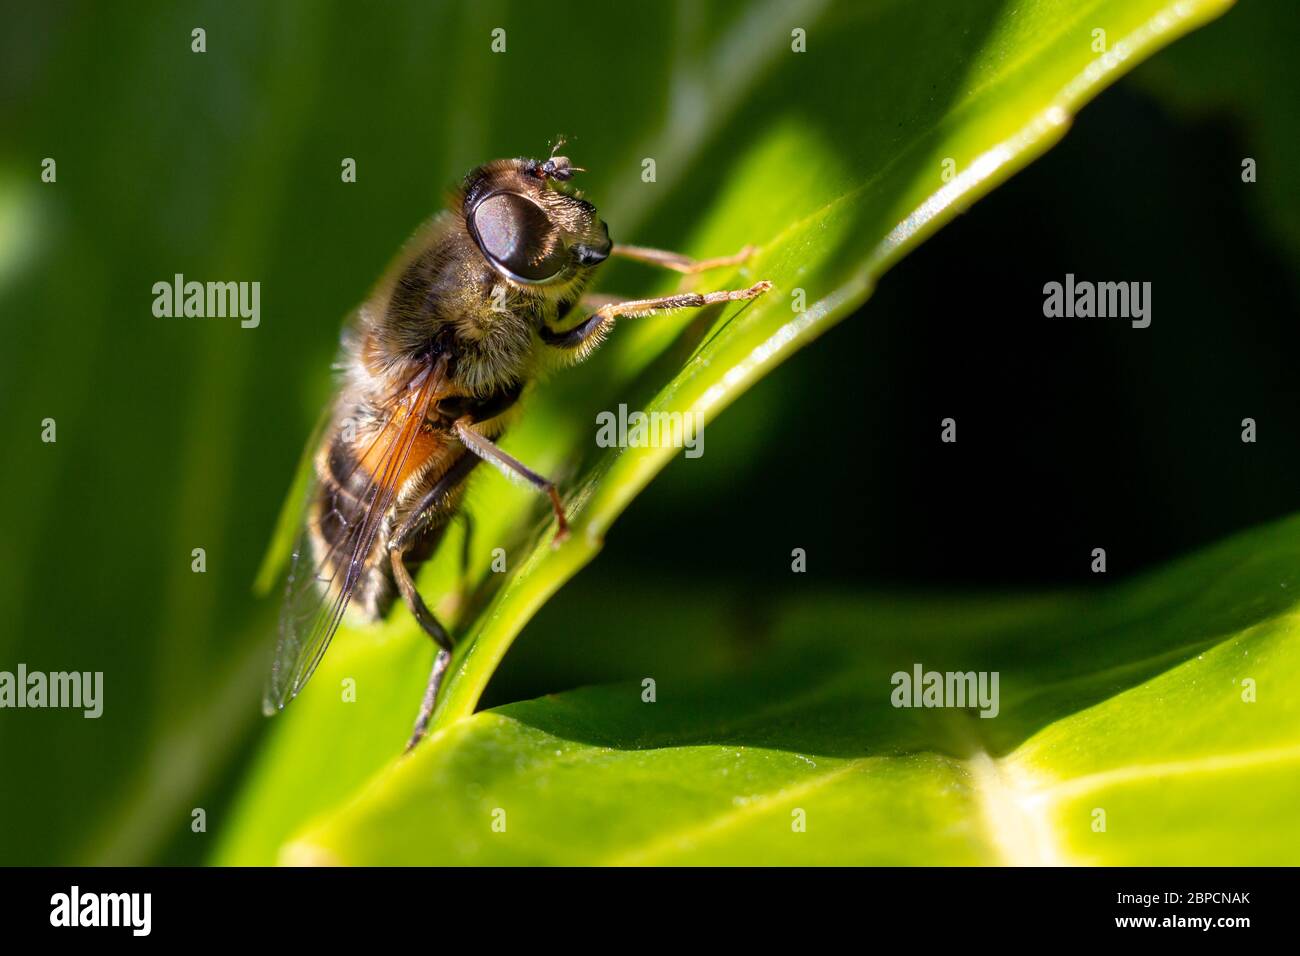 Native Irish Honey Bee on a Green Leaf in Sunlight Stock Photo